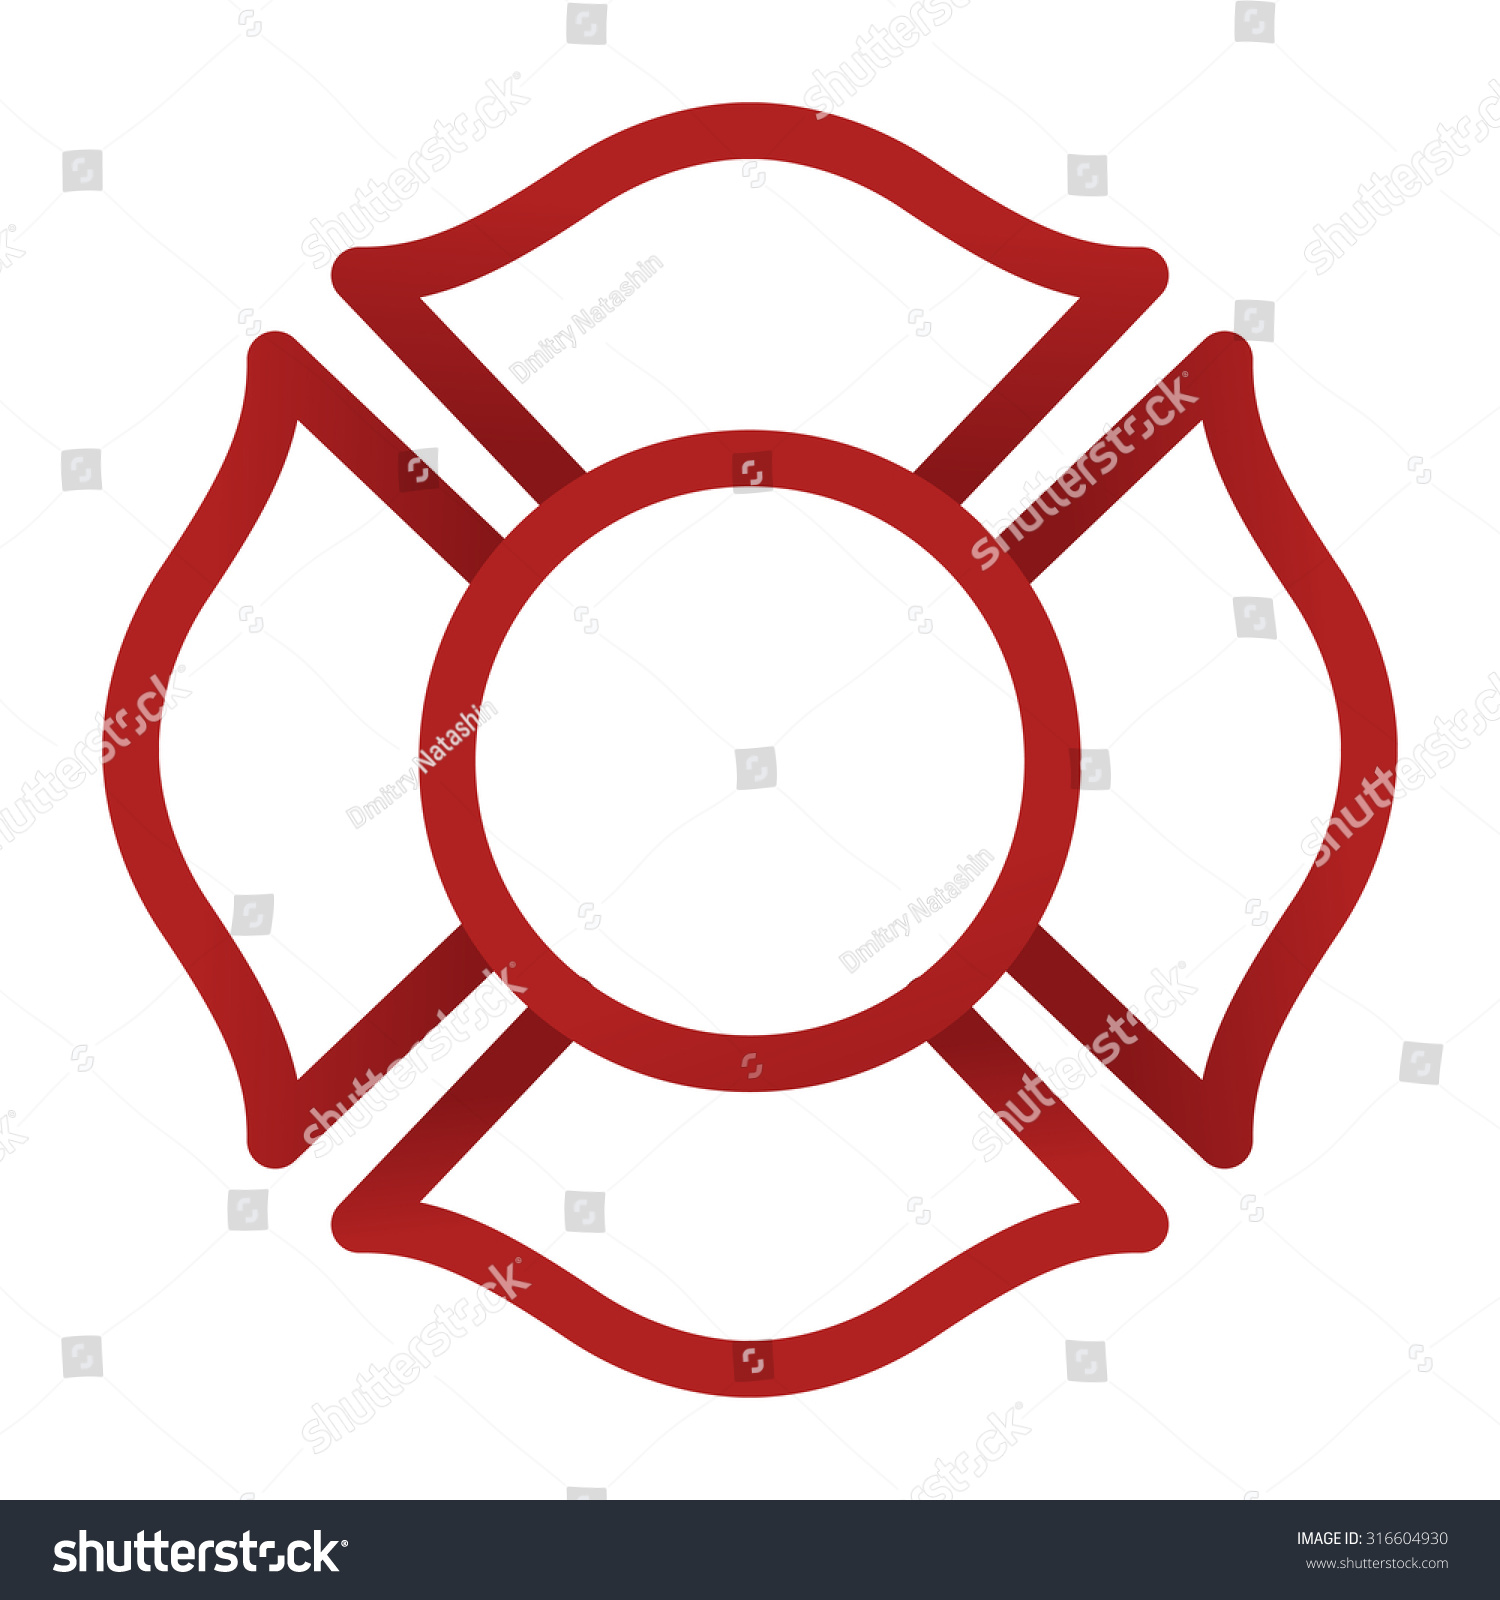 fire emblem clipart - photo #11